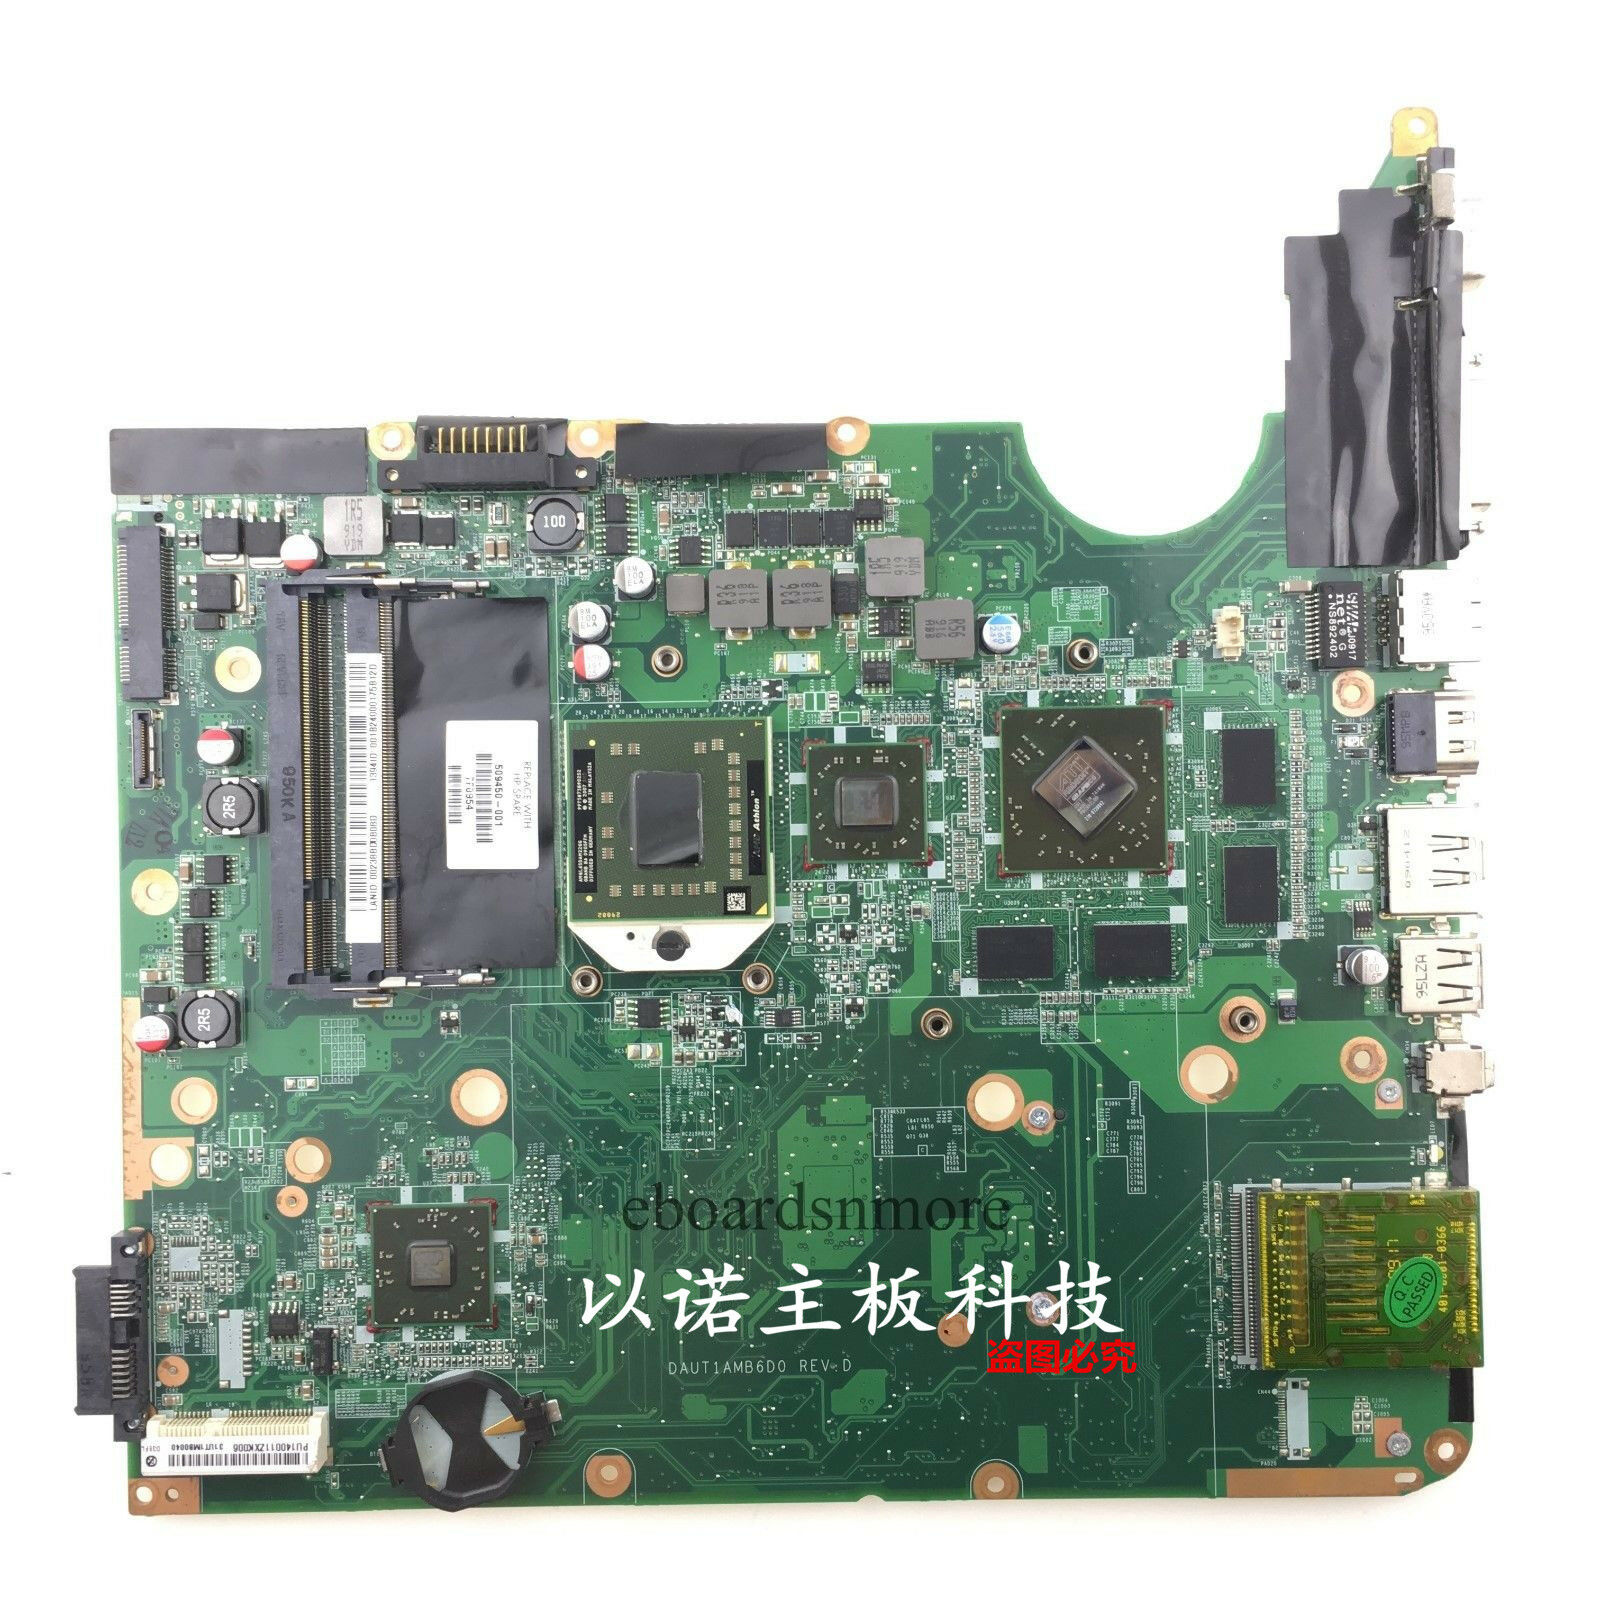 509450-001 for HP DV6 DV6-1200 Series AMD motherboard,ATI Radeon HD4650 Grade A Compatible CPU Brand: AMD Me - Click Image to Close